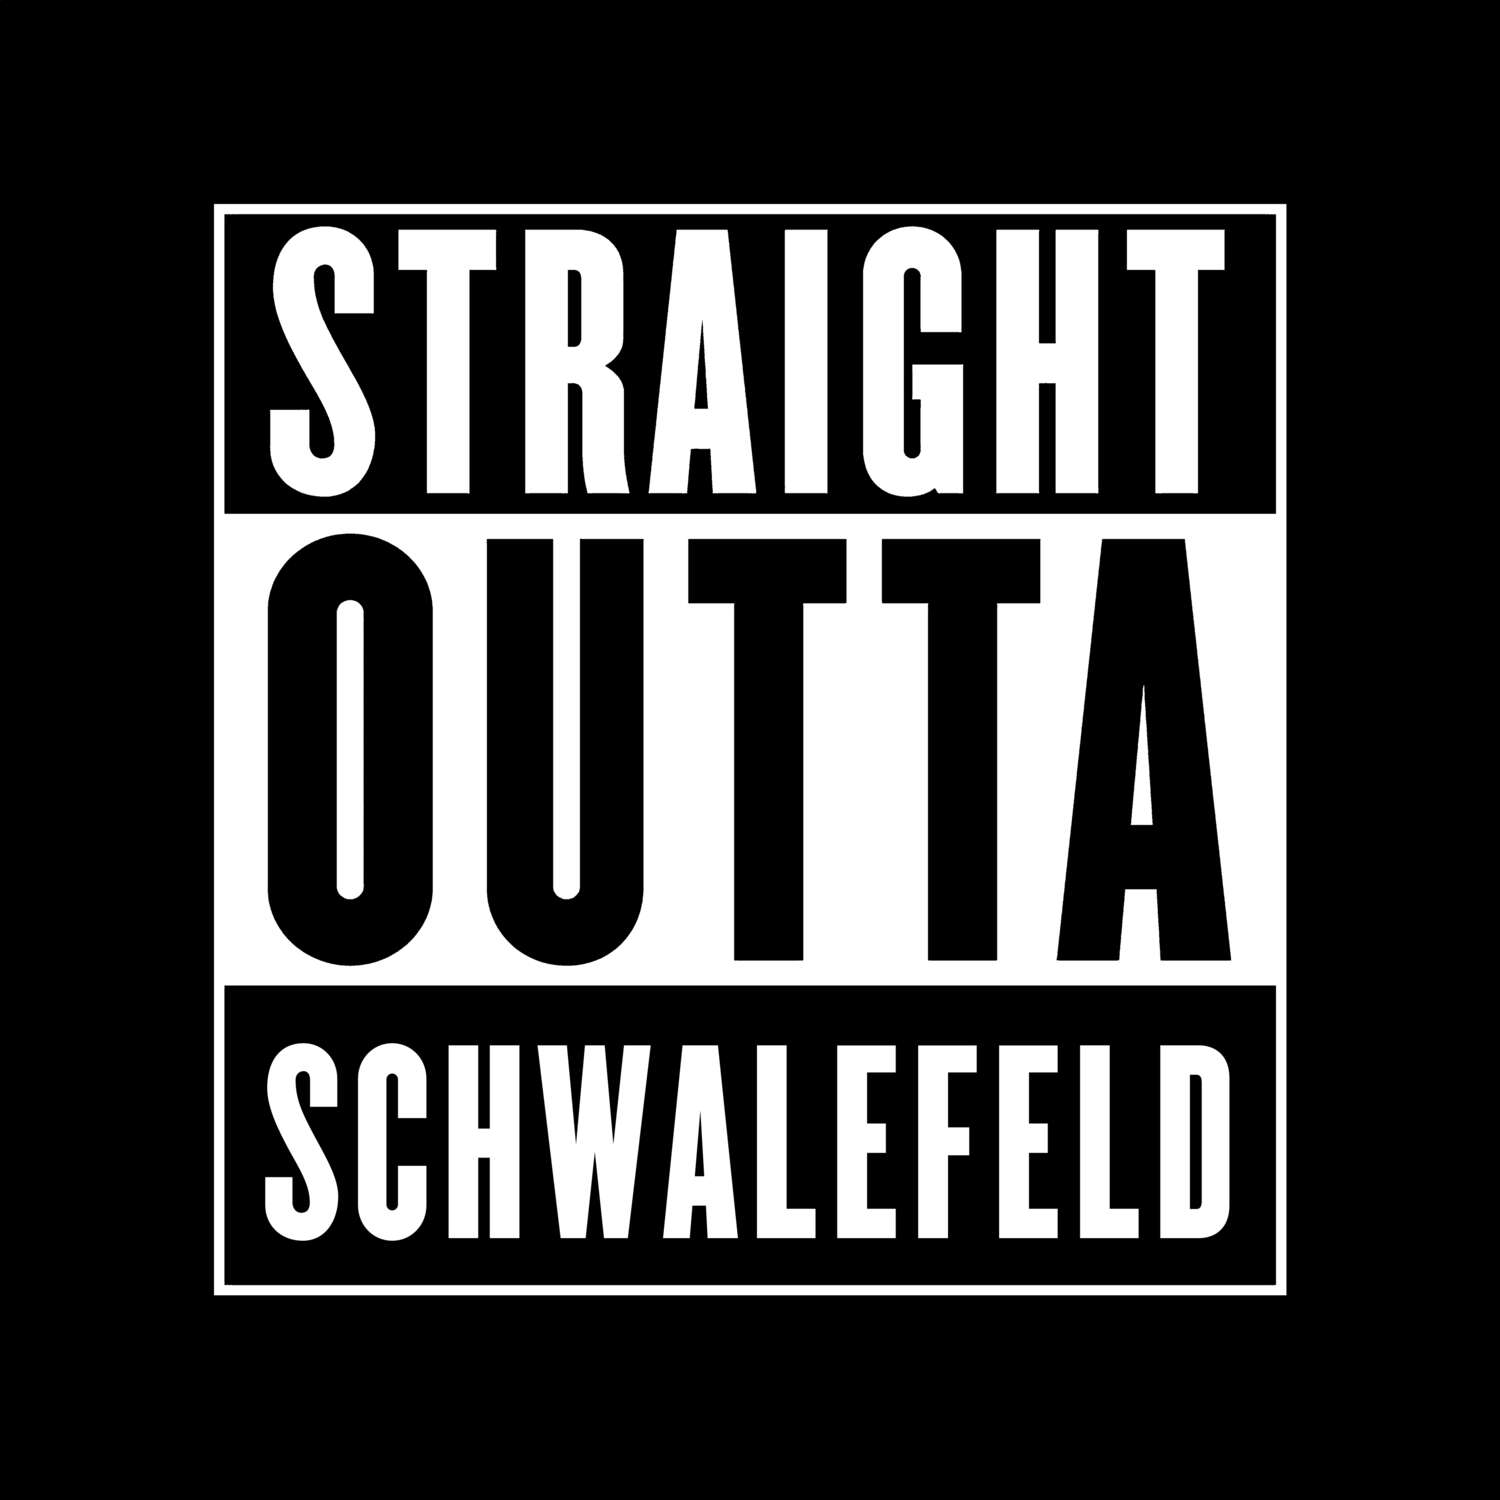 Schwalefeld T-Shirt »Straight Outta«